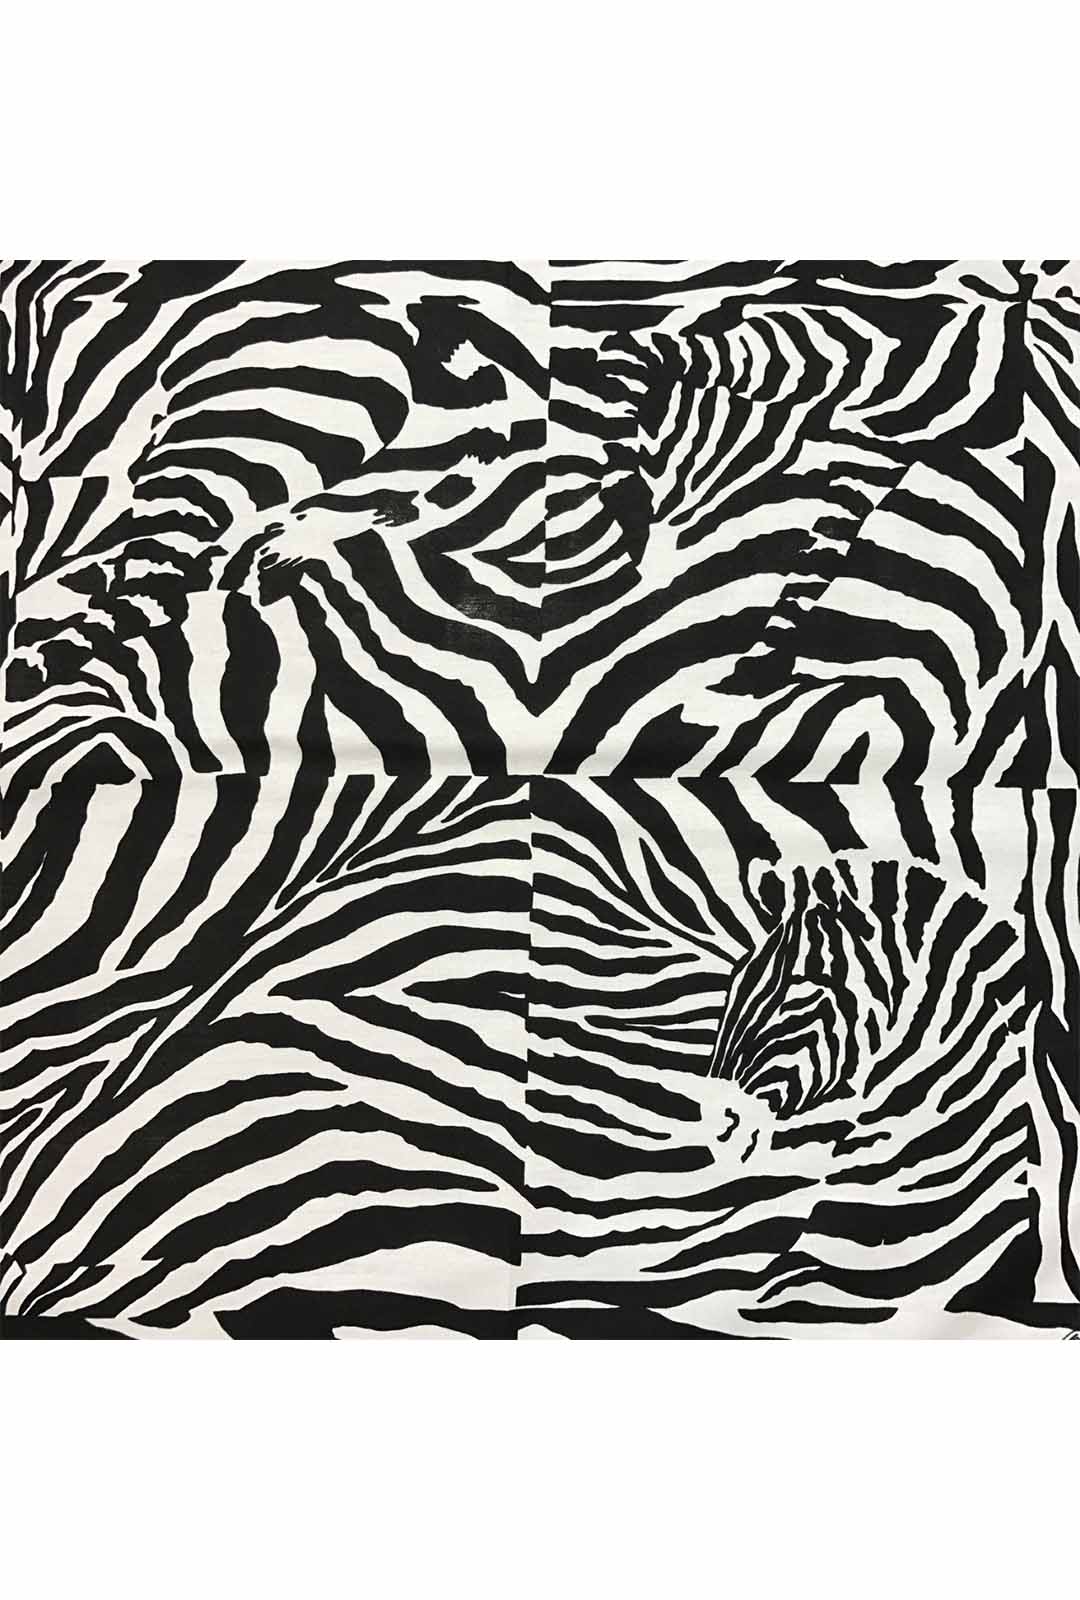 Zebra Print Bandana